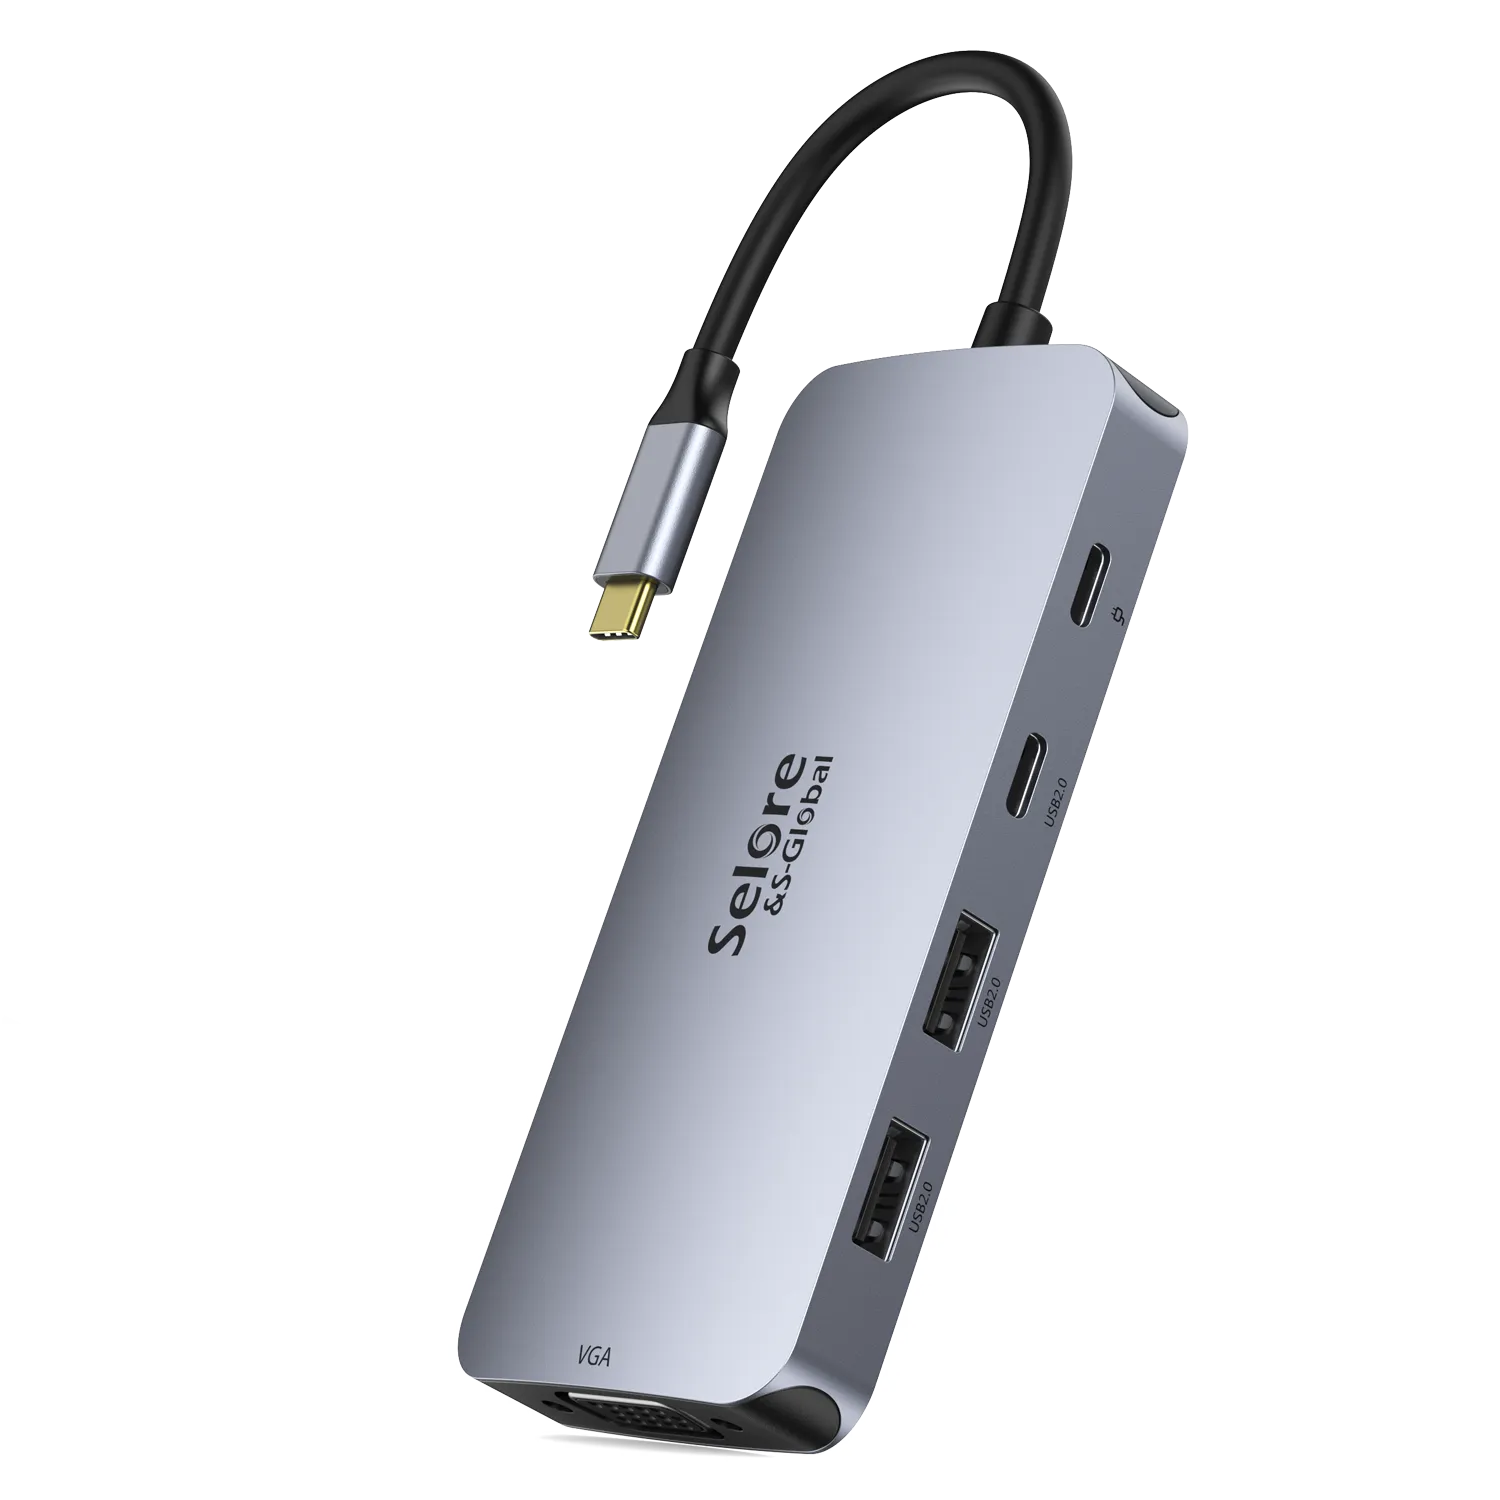 Hub USB-C e USB Para 2 Monitores HDMI Alta Compatibilidade - hi-prime - Hub  - Magazine Luiza